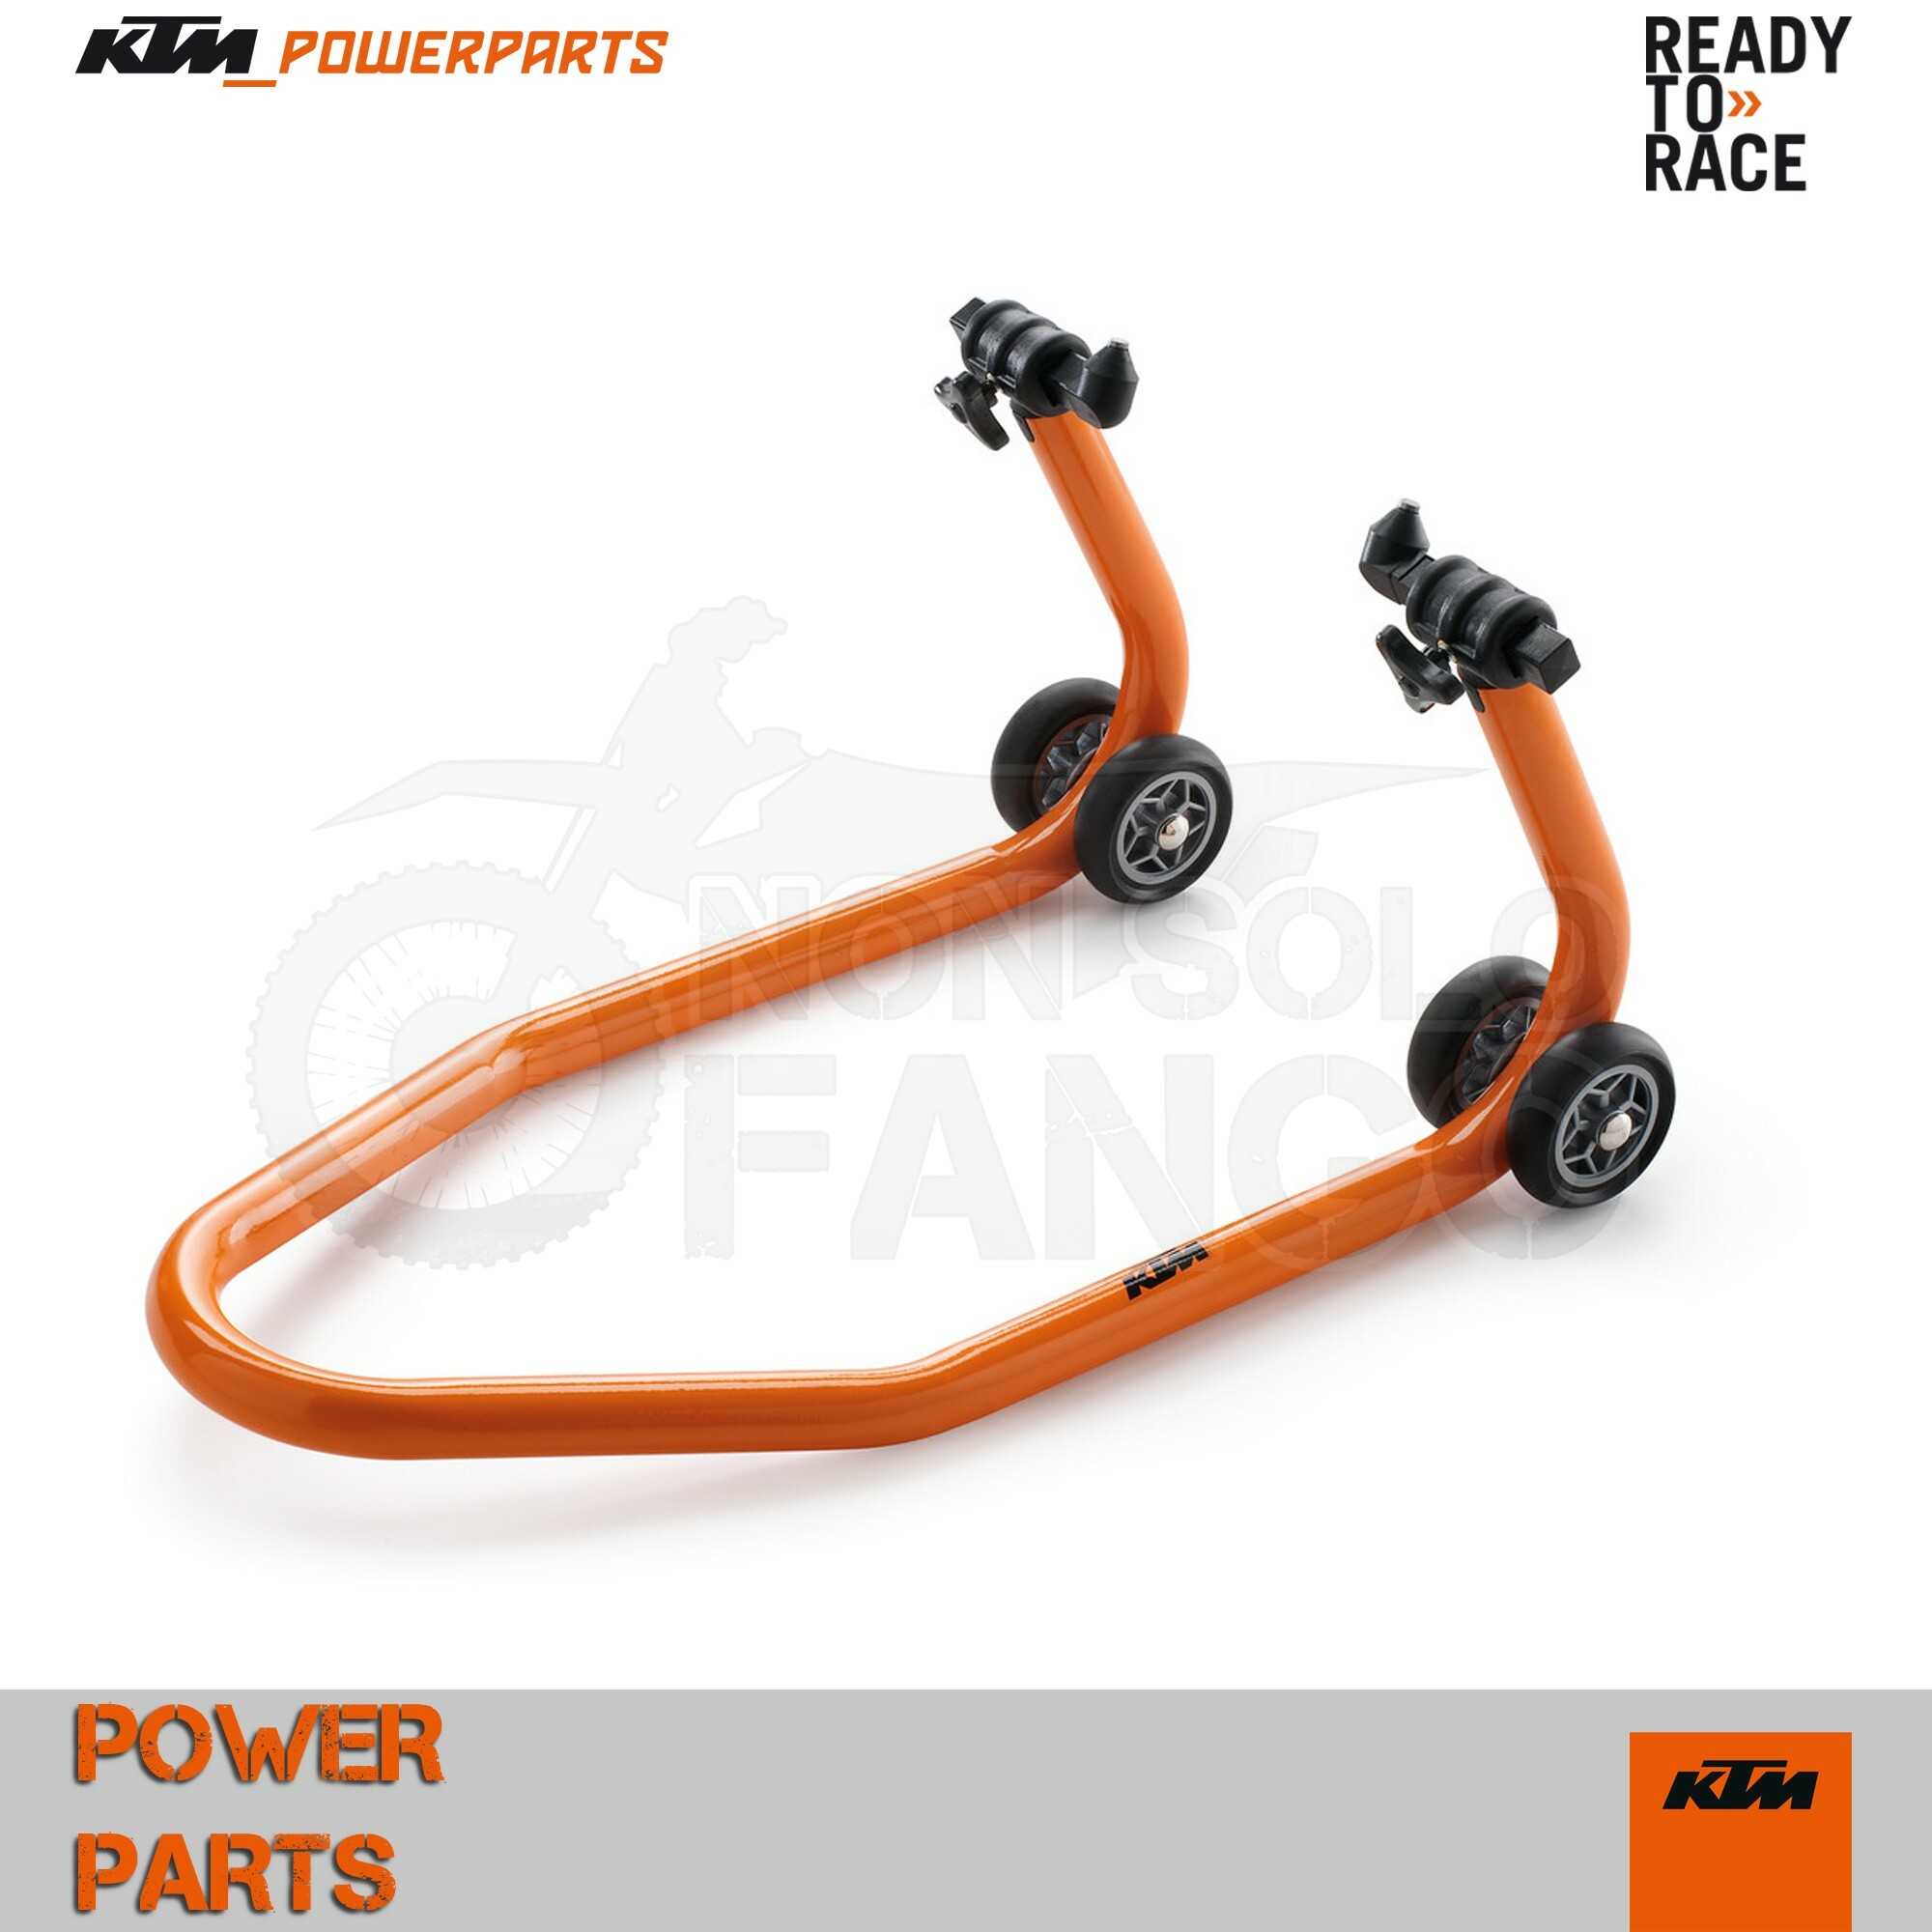 Cavalletto alzamoto anteriore KTM Power Parts